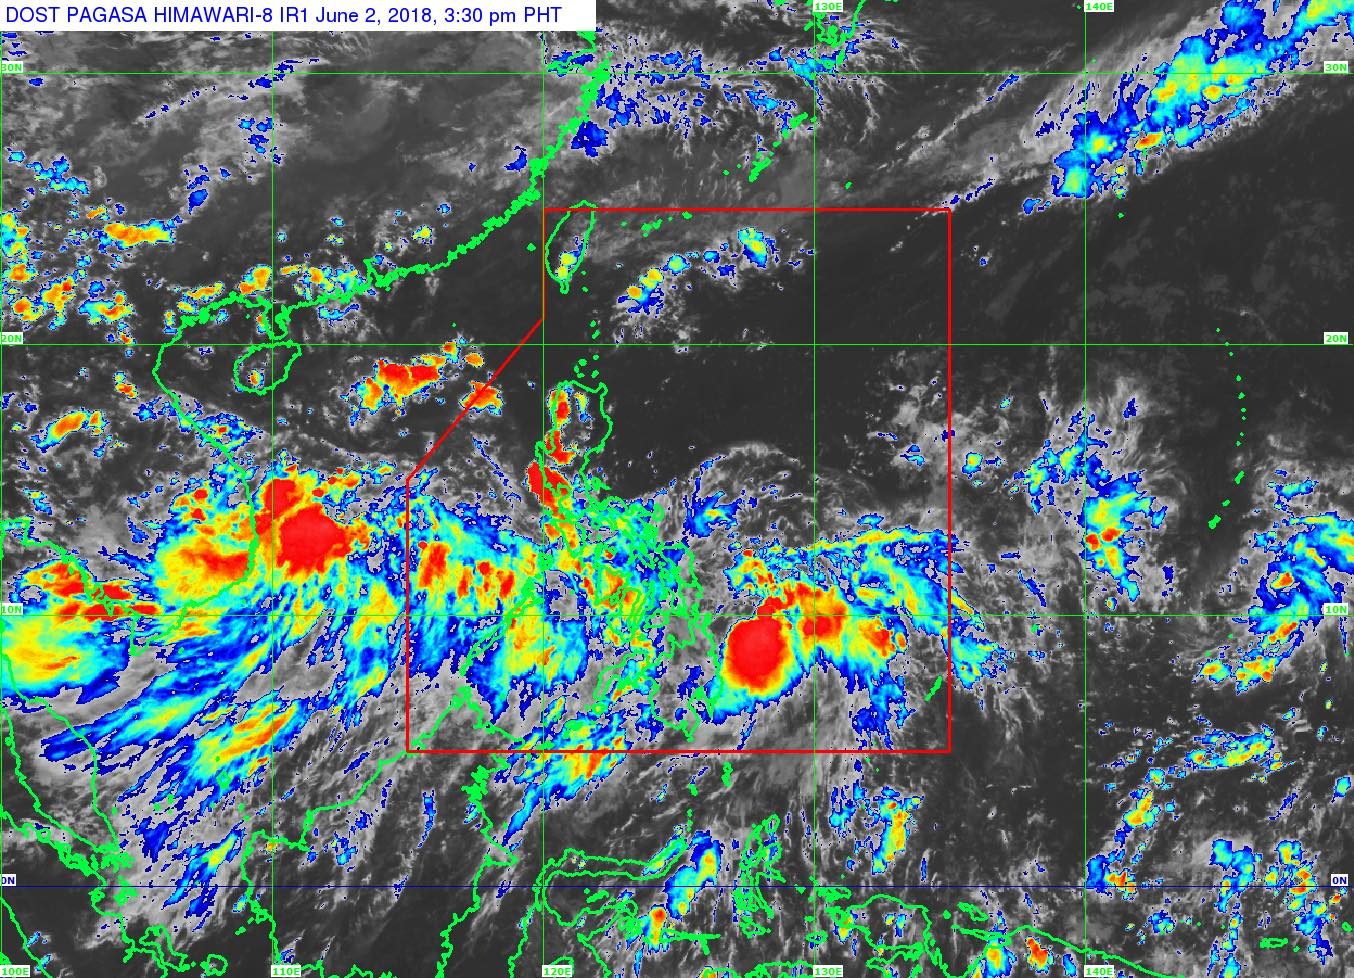 LPA affecting Eastern Visayas, Caraga, Davao